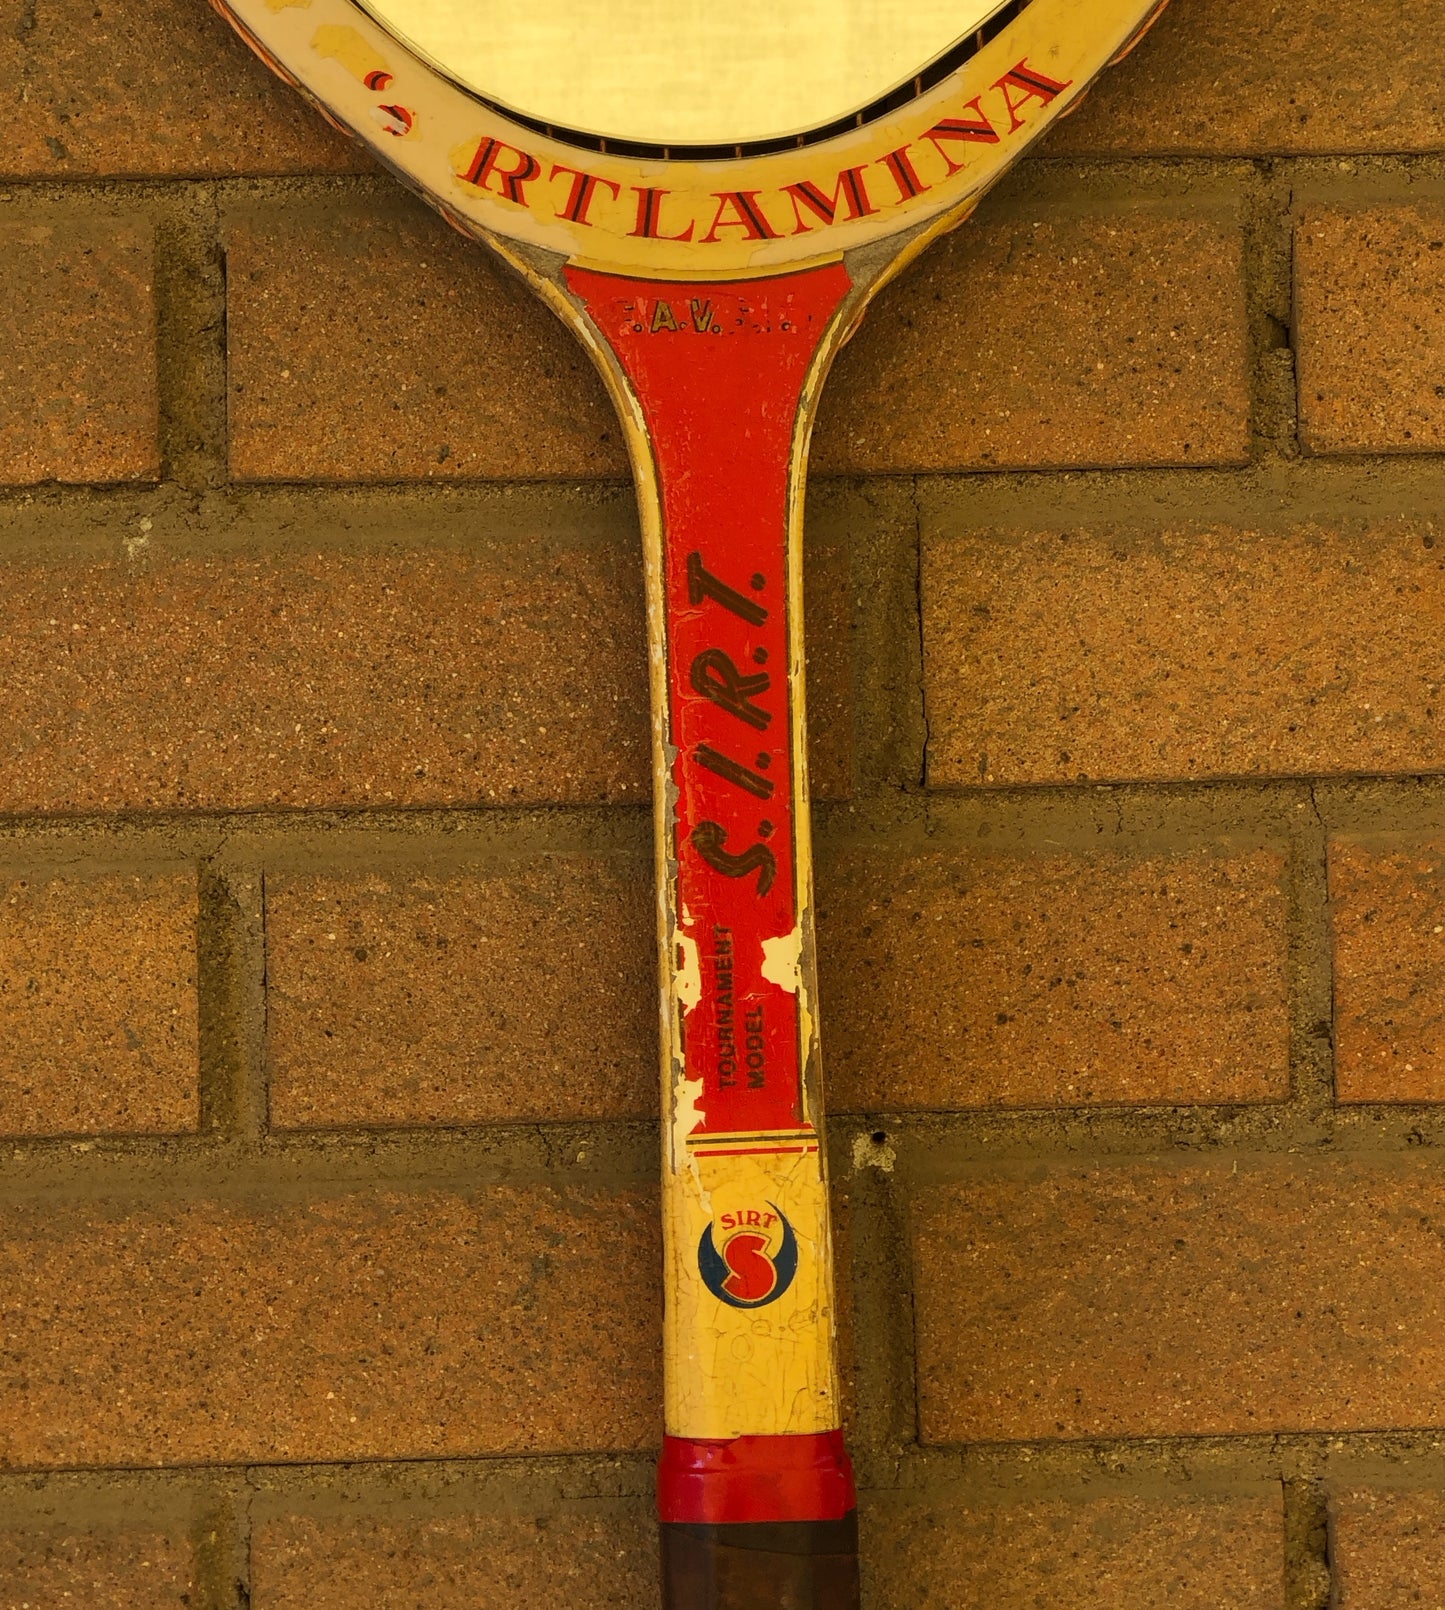 Racchetta Sirtlamina Vintage in Legno con Specchio- Vintage Mirror tennis wood Racket